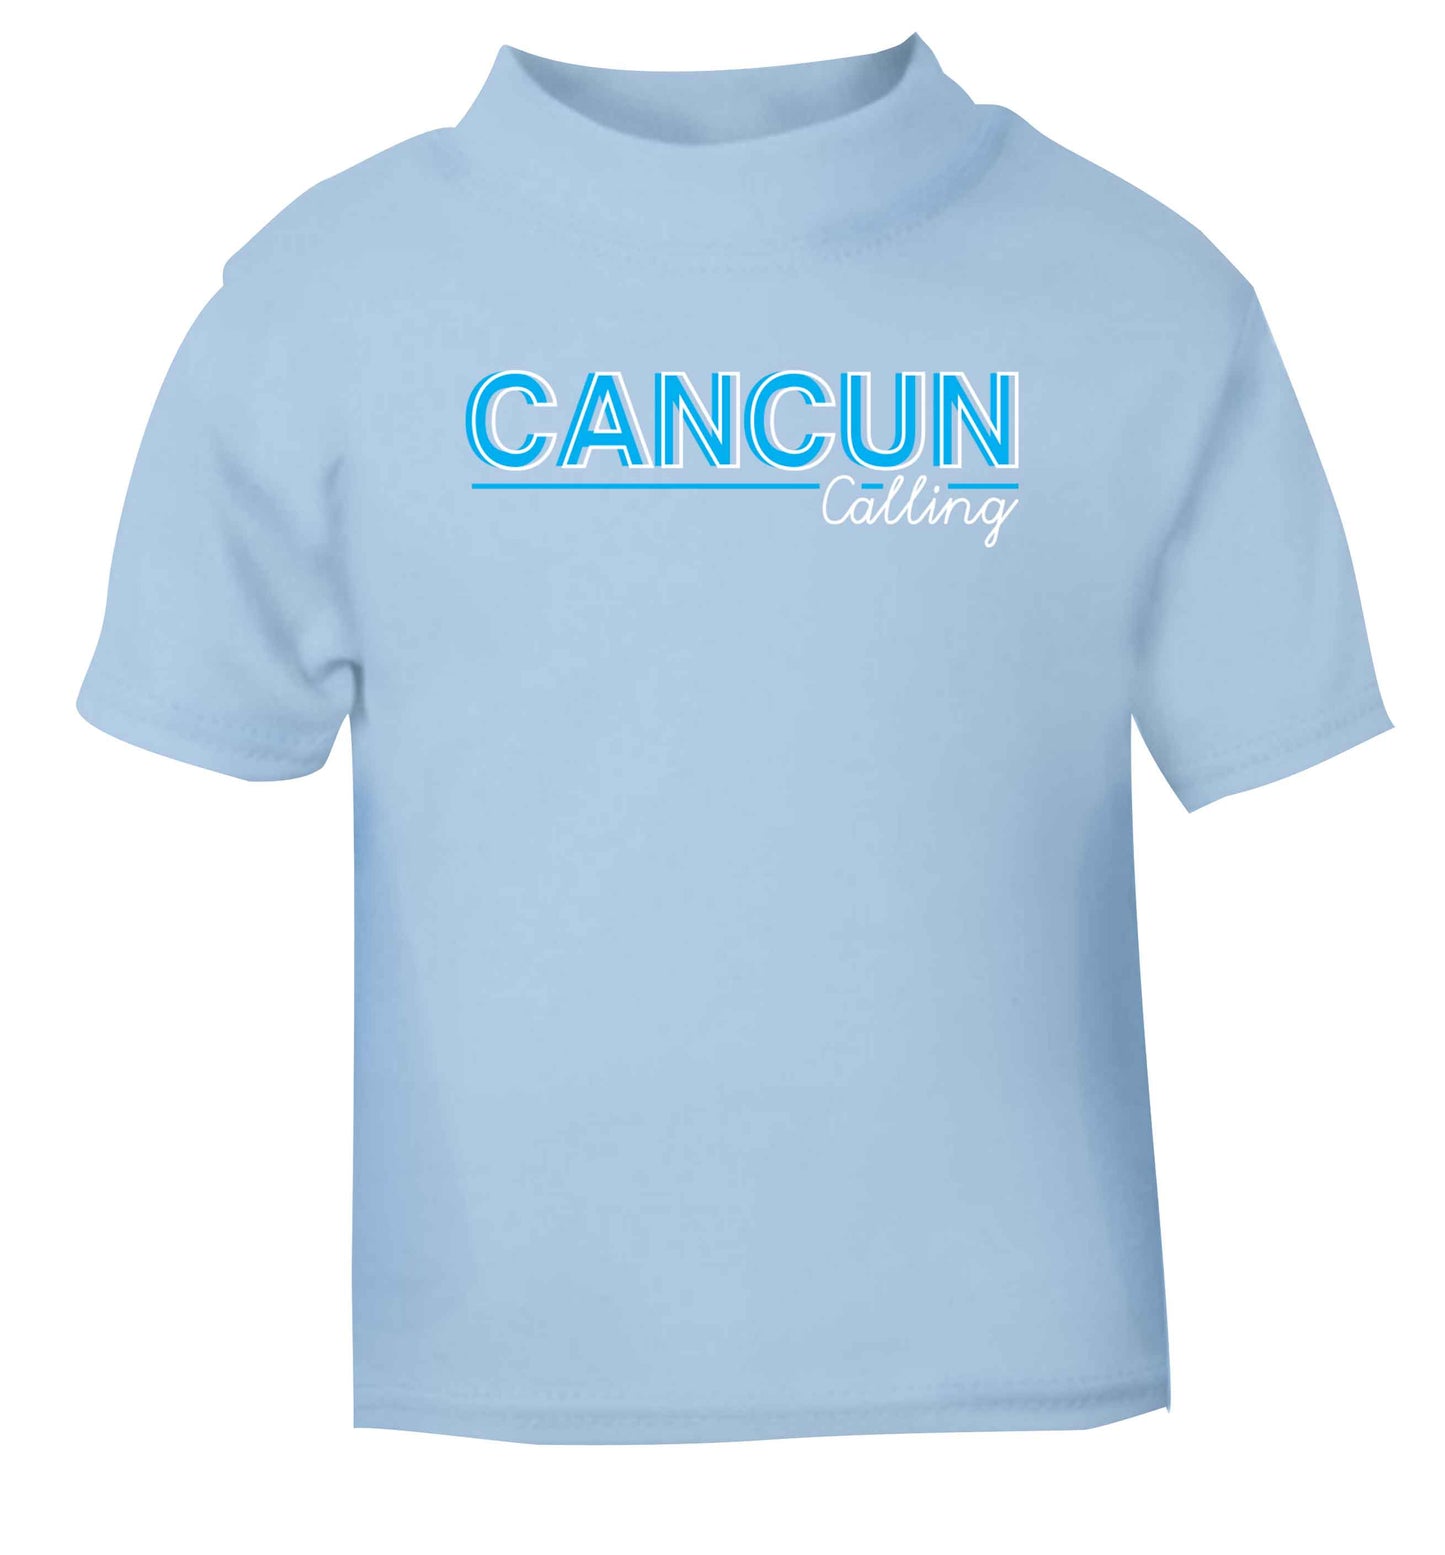 Cancun calling light blue Baby Toddler Tshirt 2 Years